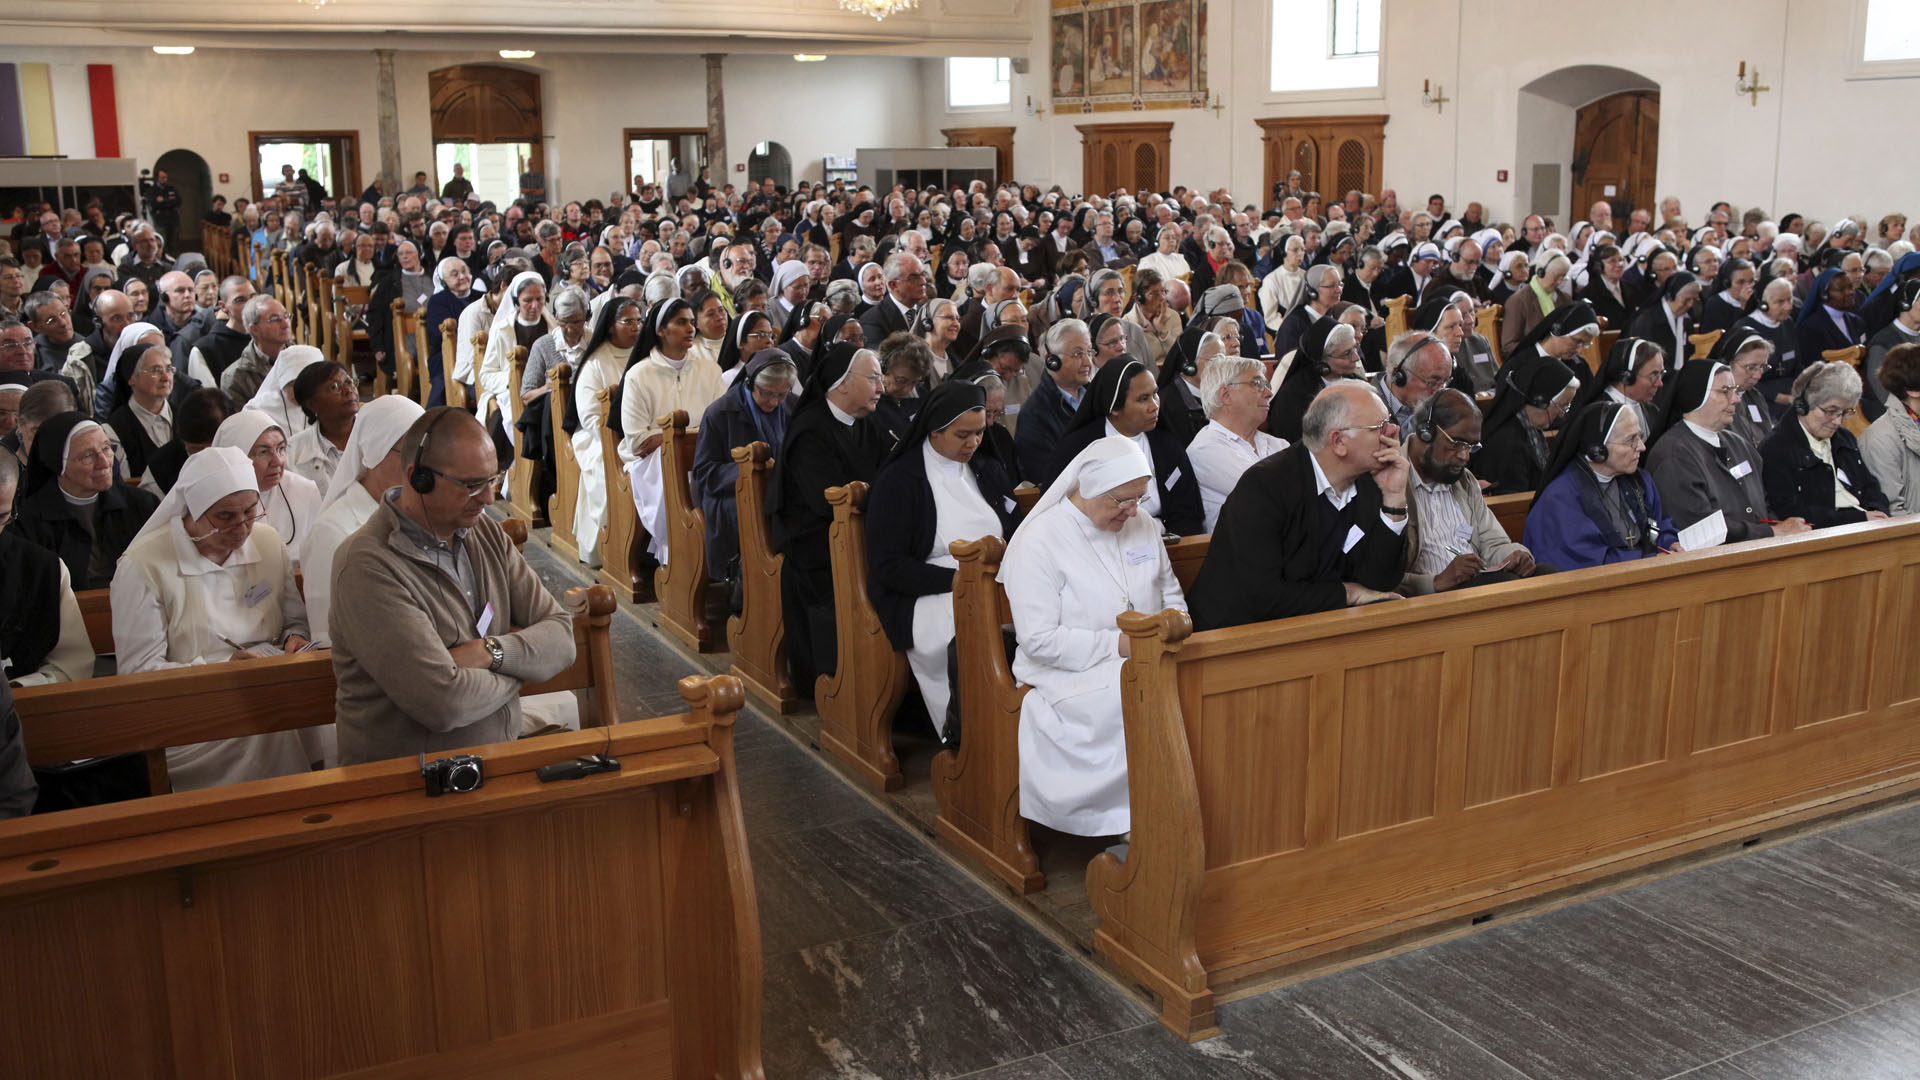 Baar le 23 juin 2015. Journée de la vie consacrée. Conférence de Mgr Braz de Aviz. (Photo: Bernard Hallet)